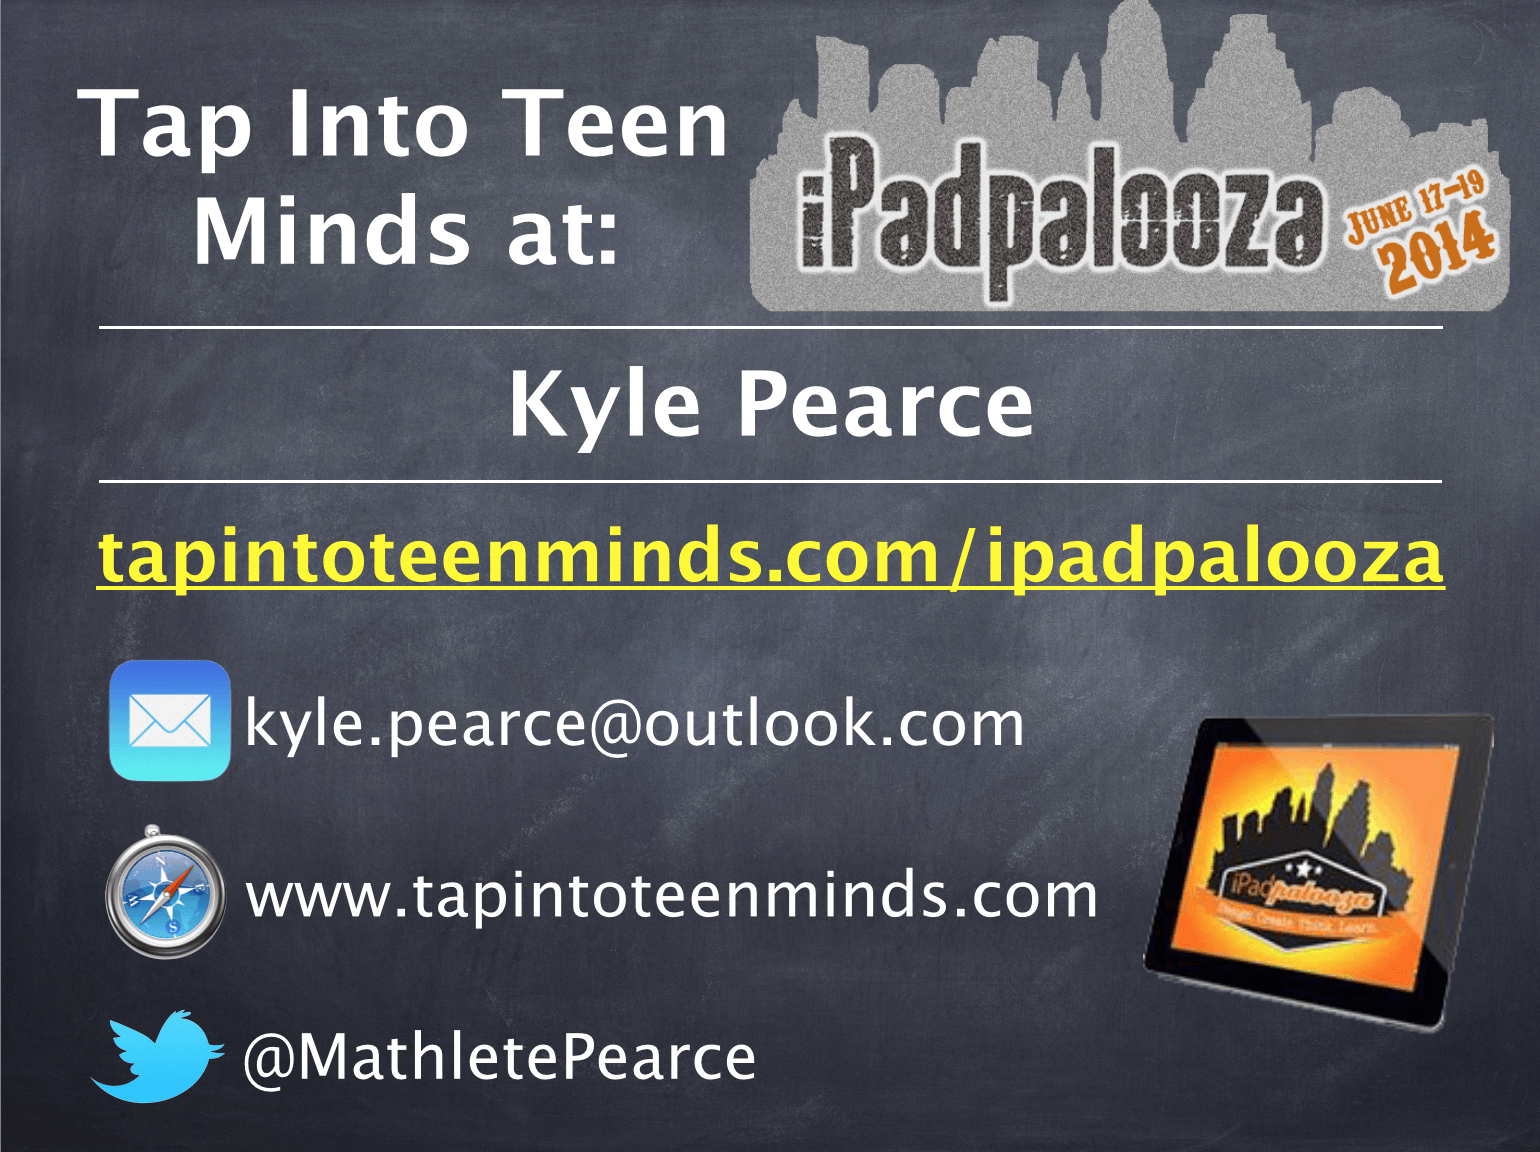 iPadpalooza 2014 Tap Into Teen Minds Session